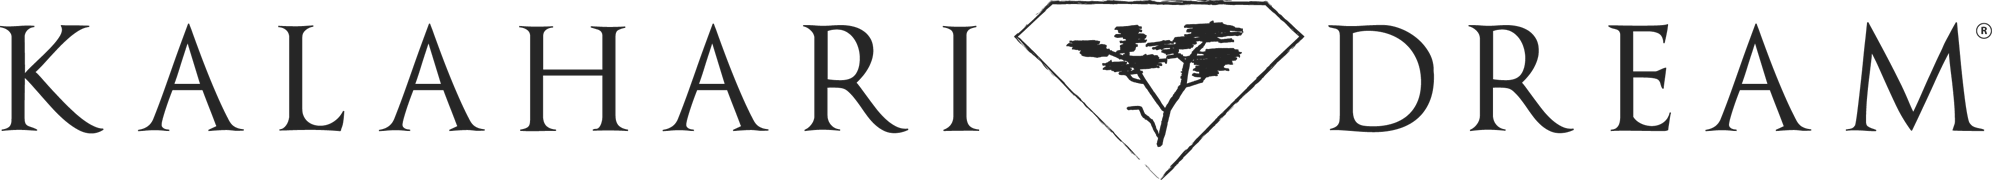 Kalahari Dream Logo